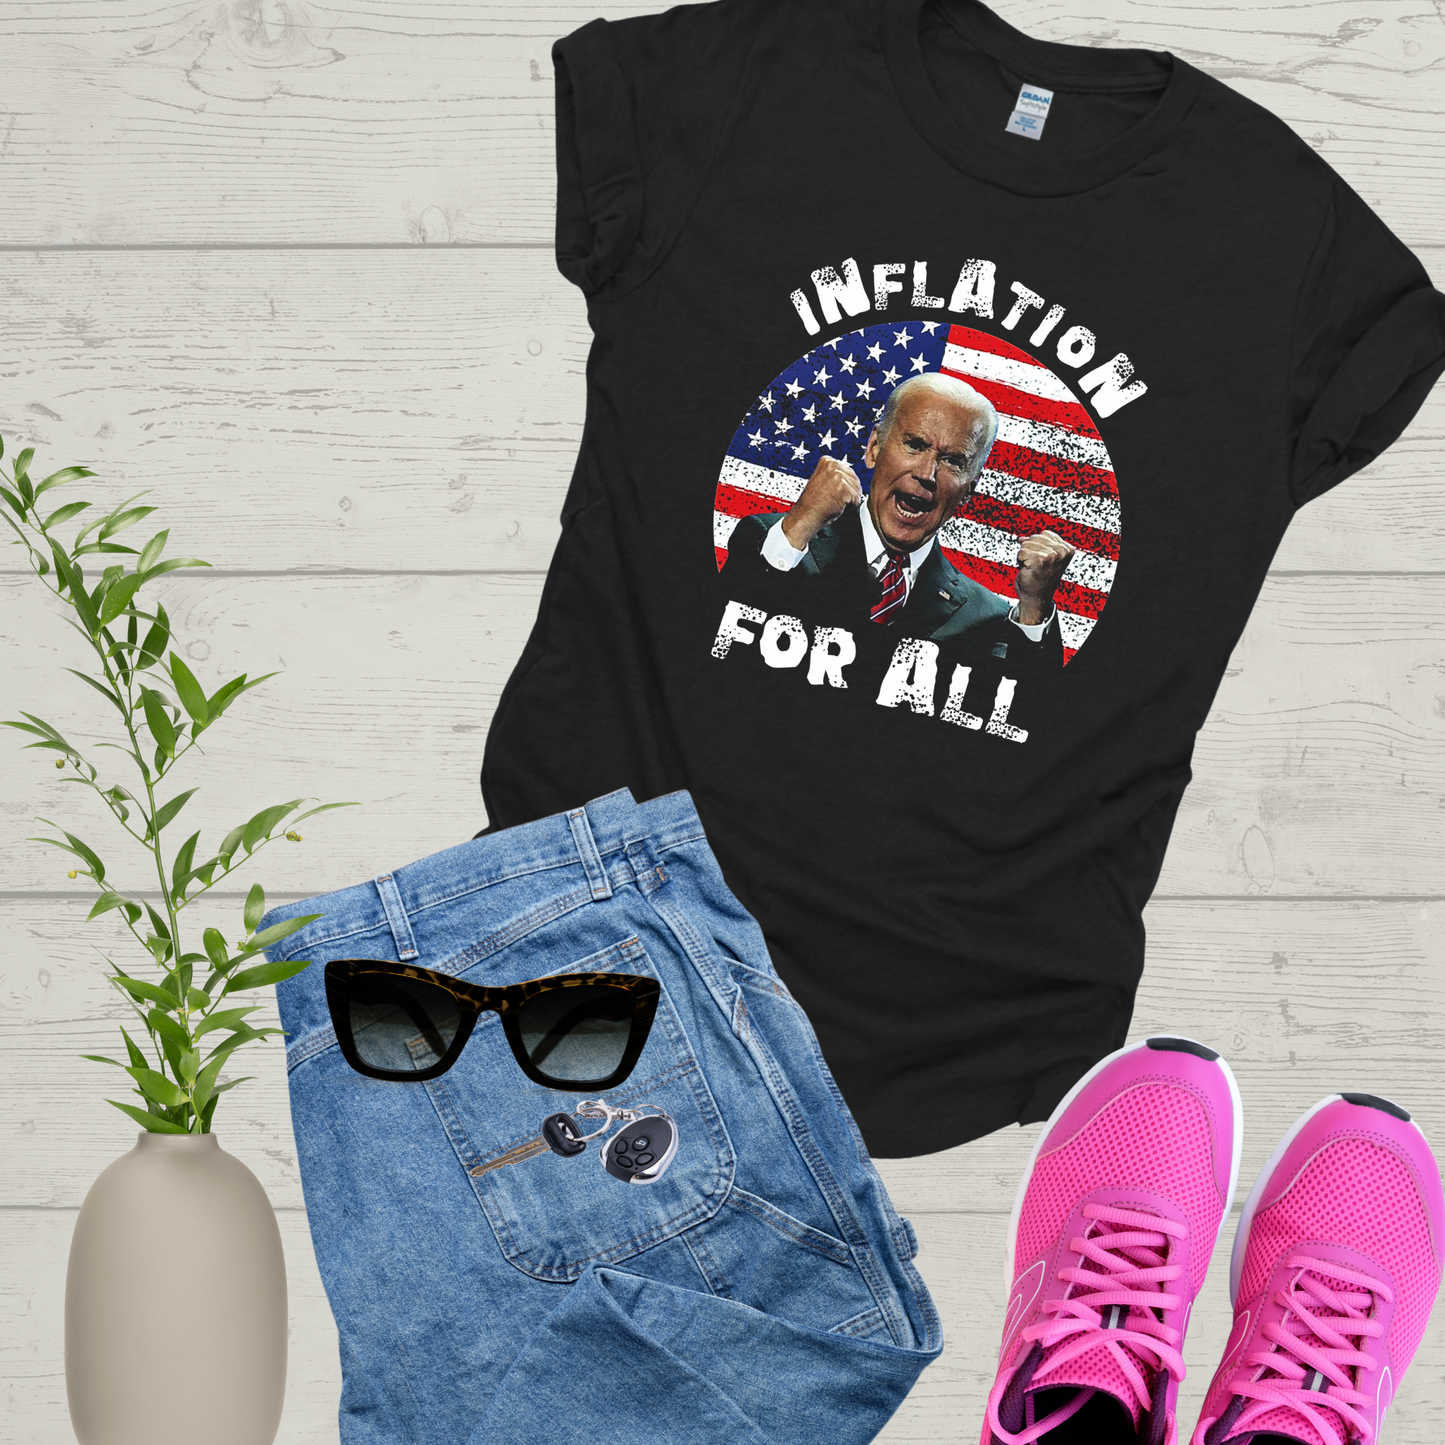 Joe Biden Inflation for All Adult Humor T-shirt, USA President Funny Joke, Democrat T-shirt